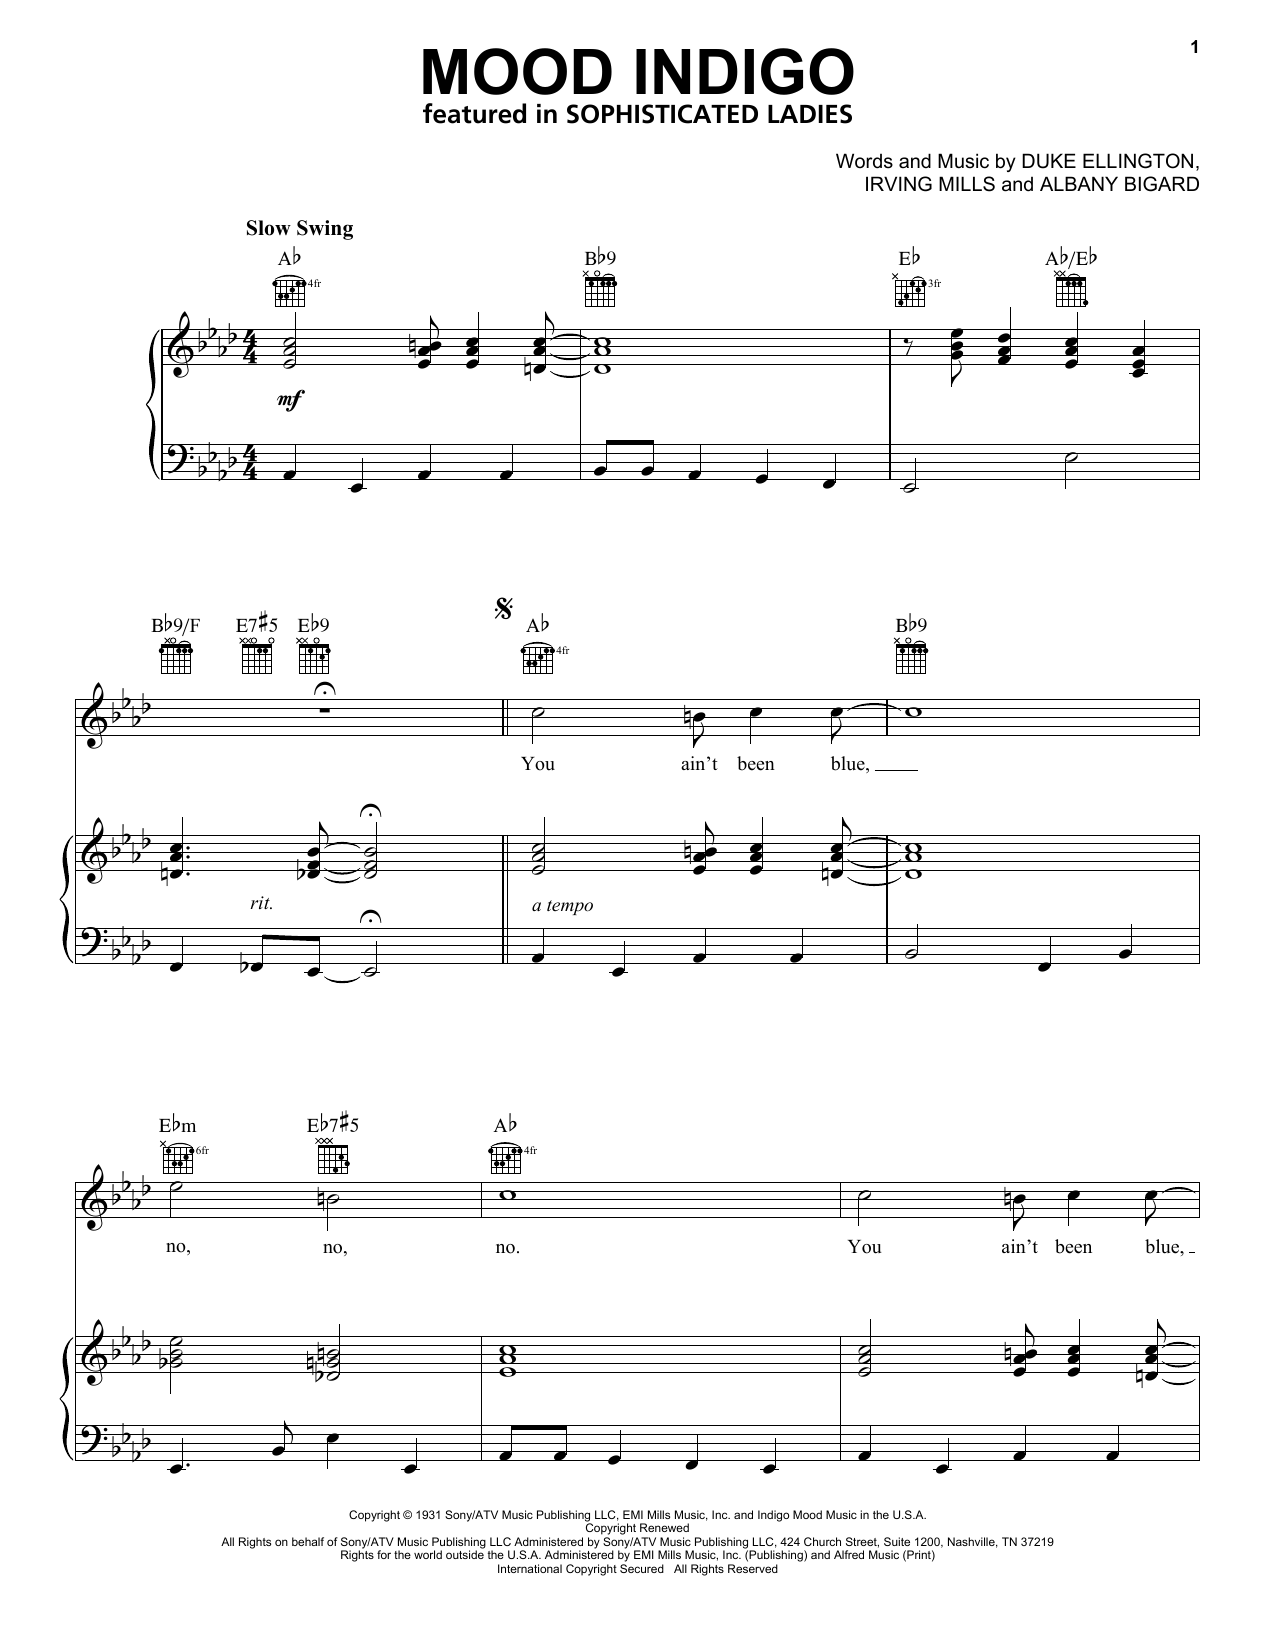 Duke Ellington Mood Indigo Sheet Music Notes & Chords for Piano - Download or Print PDF